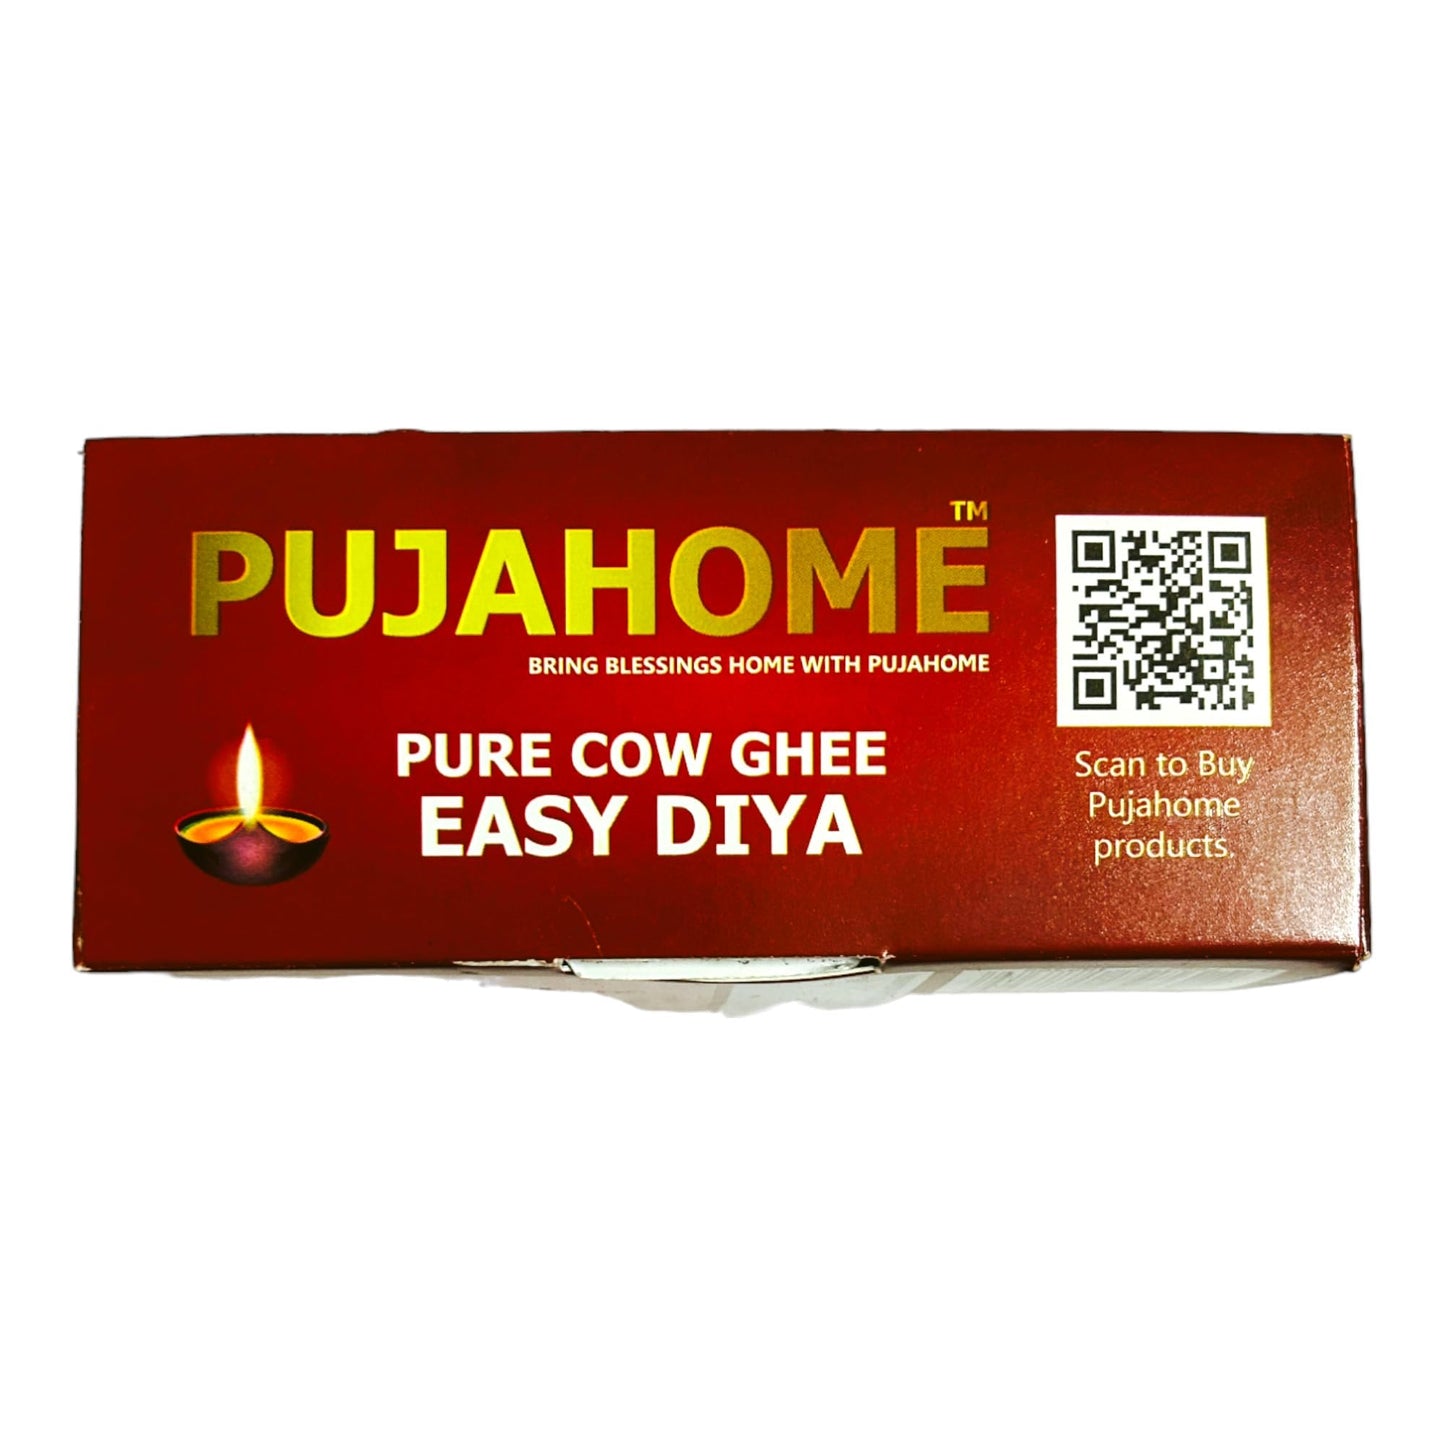 Pujahome Pure Cow Ghee Diya Wicks (50 Pieces) 30min Burning Time, Wax Free